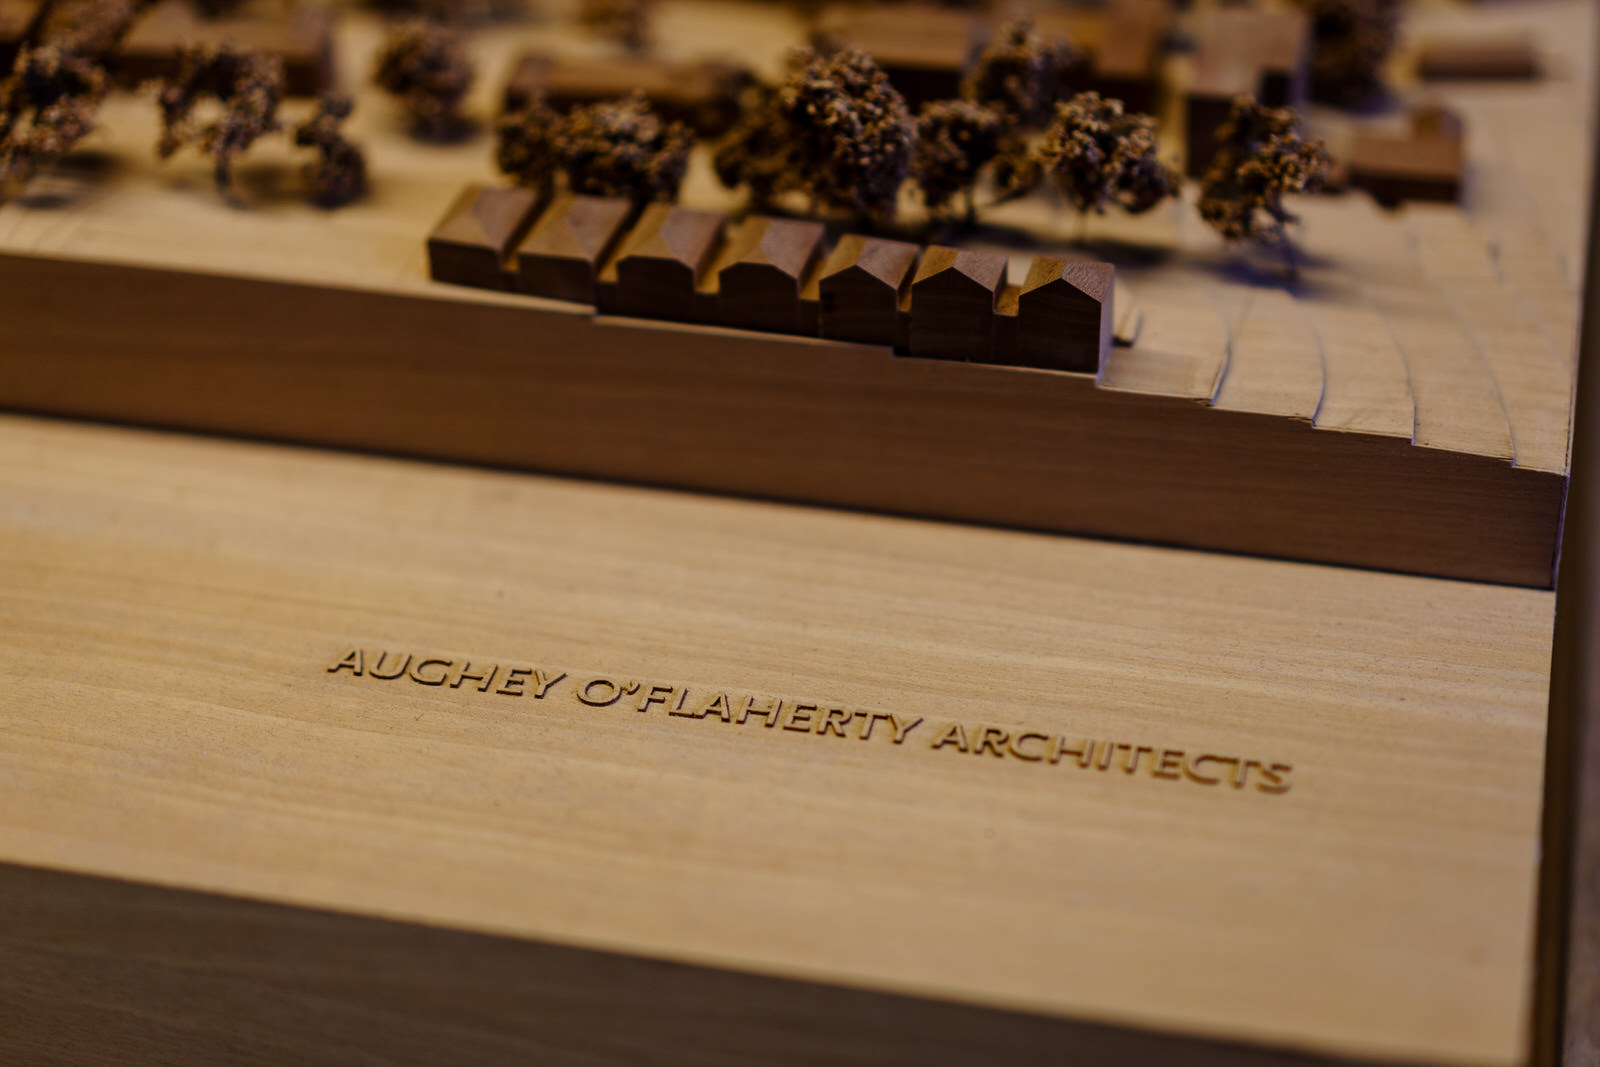  Aughey O’ Flaherty Architects. Dublin Ireland.  